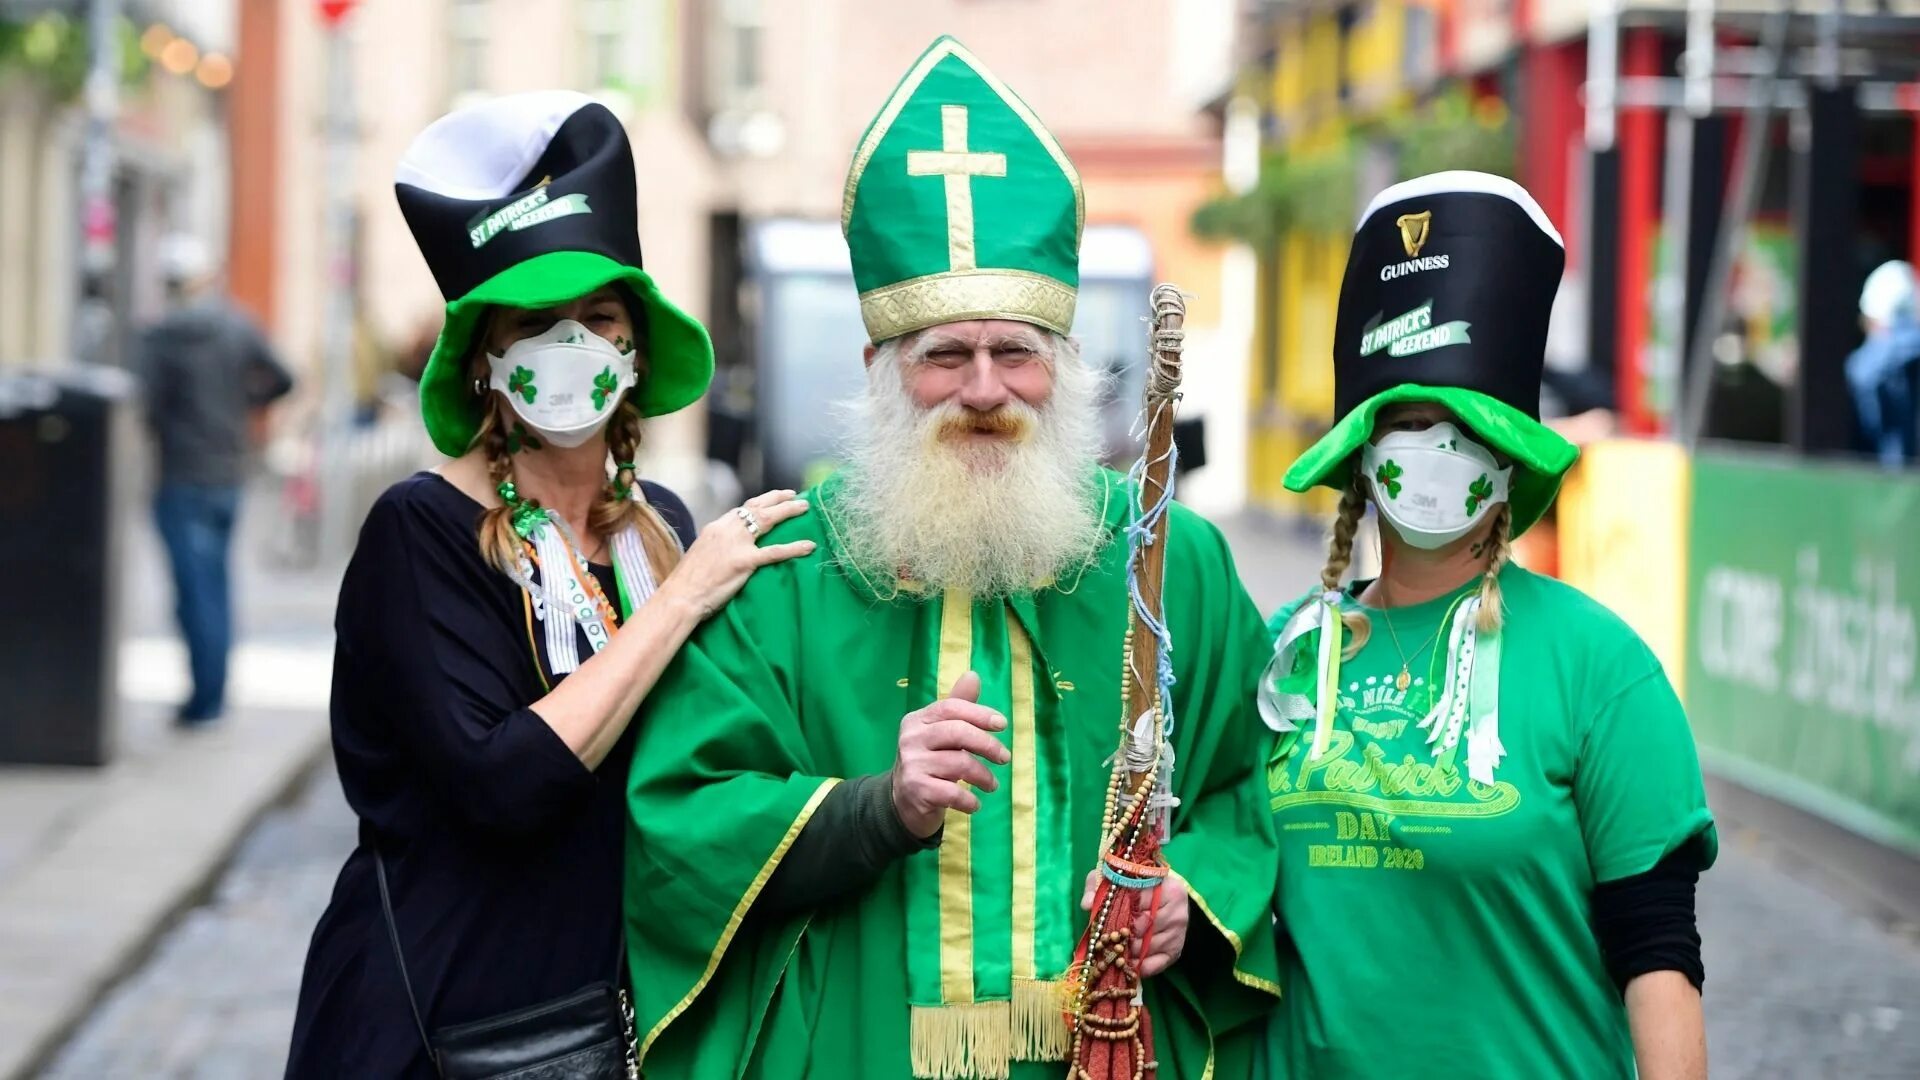 Foe день святого патрика. День Святого Патрика Guinness. St. Patrick праздник. День Святого Патрика в Ирландии. День Святого Патрика традиции.